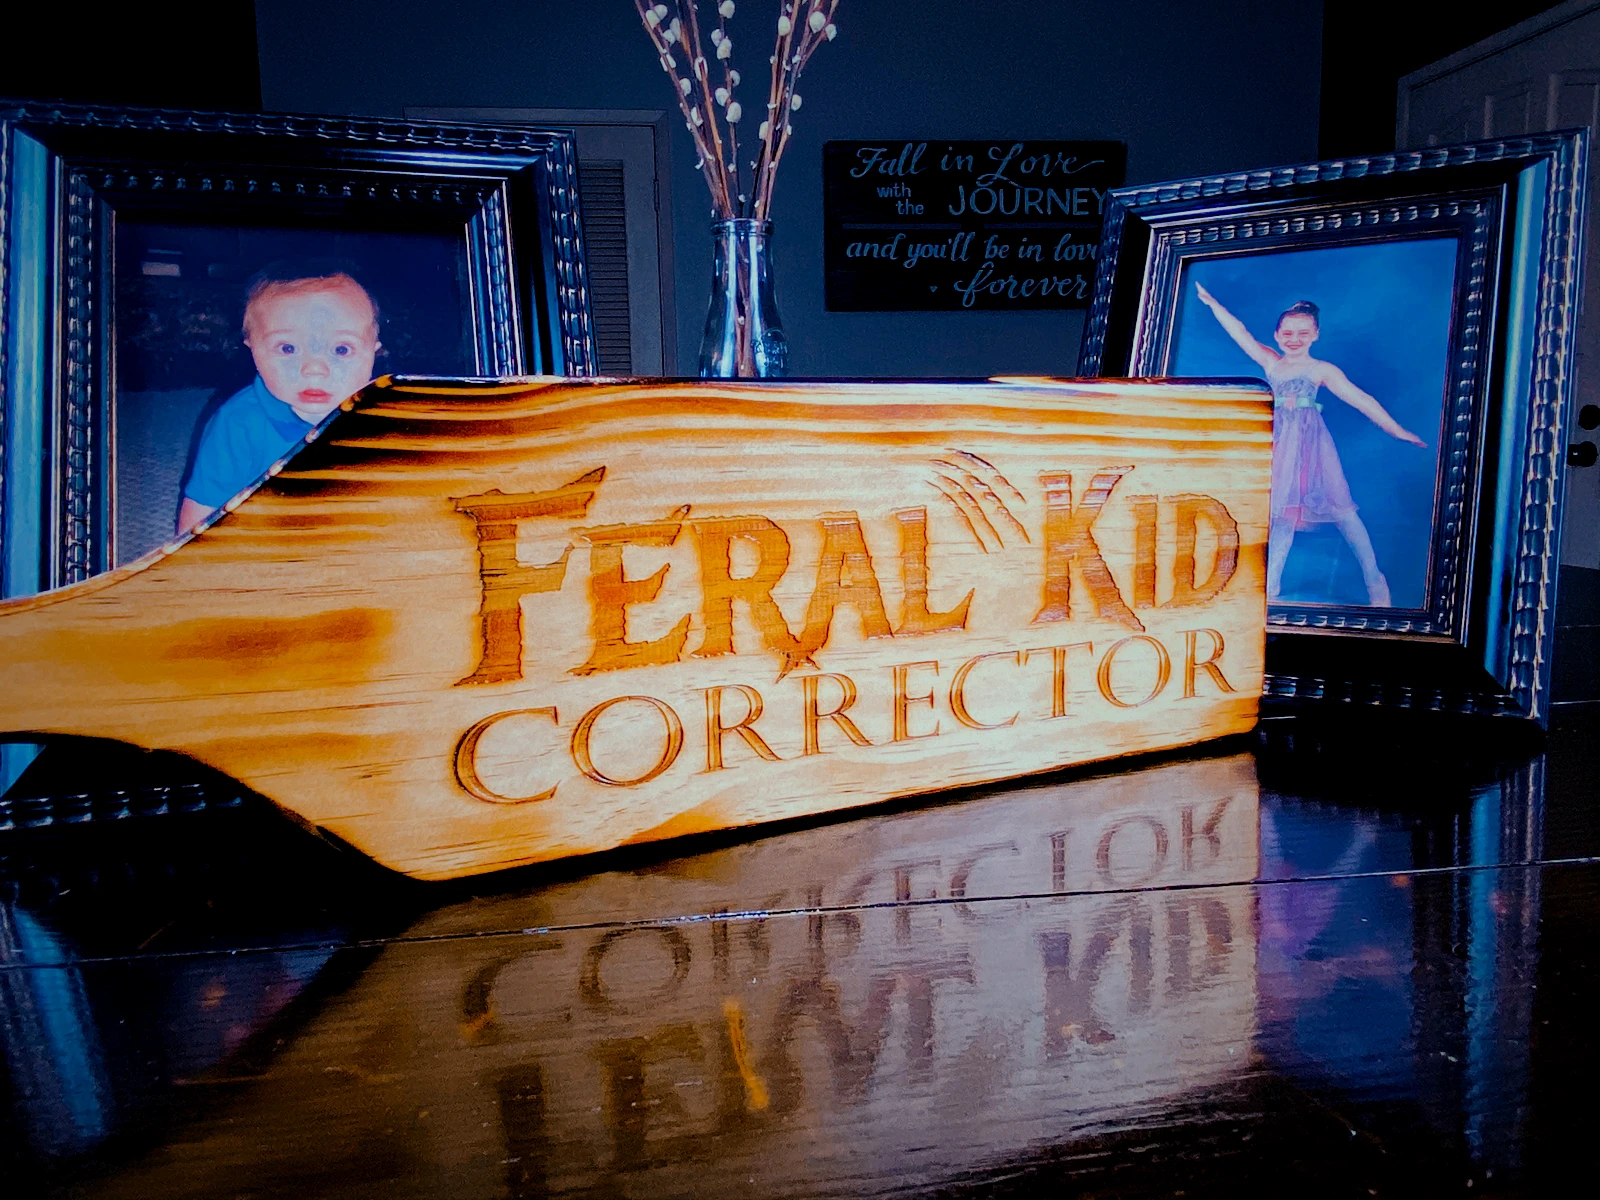 Feral Kid Corrector